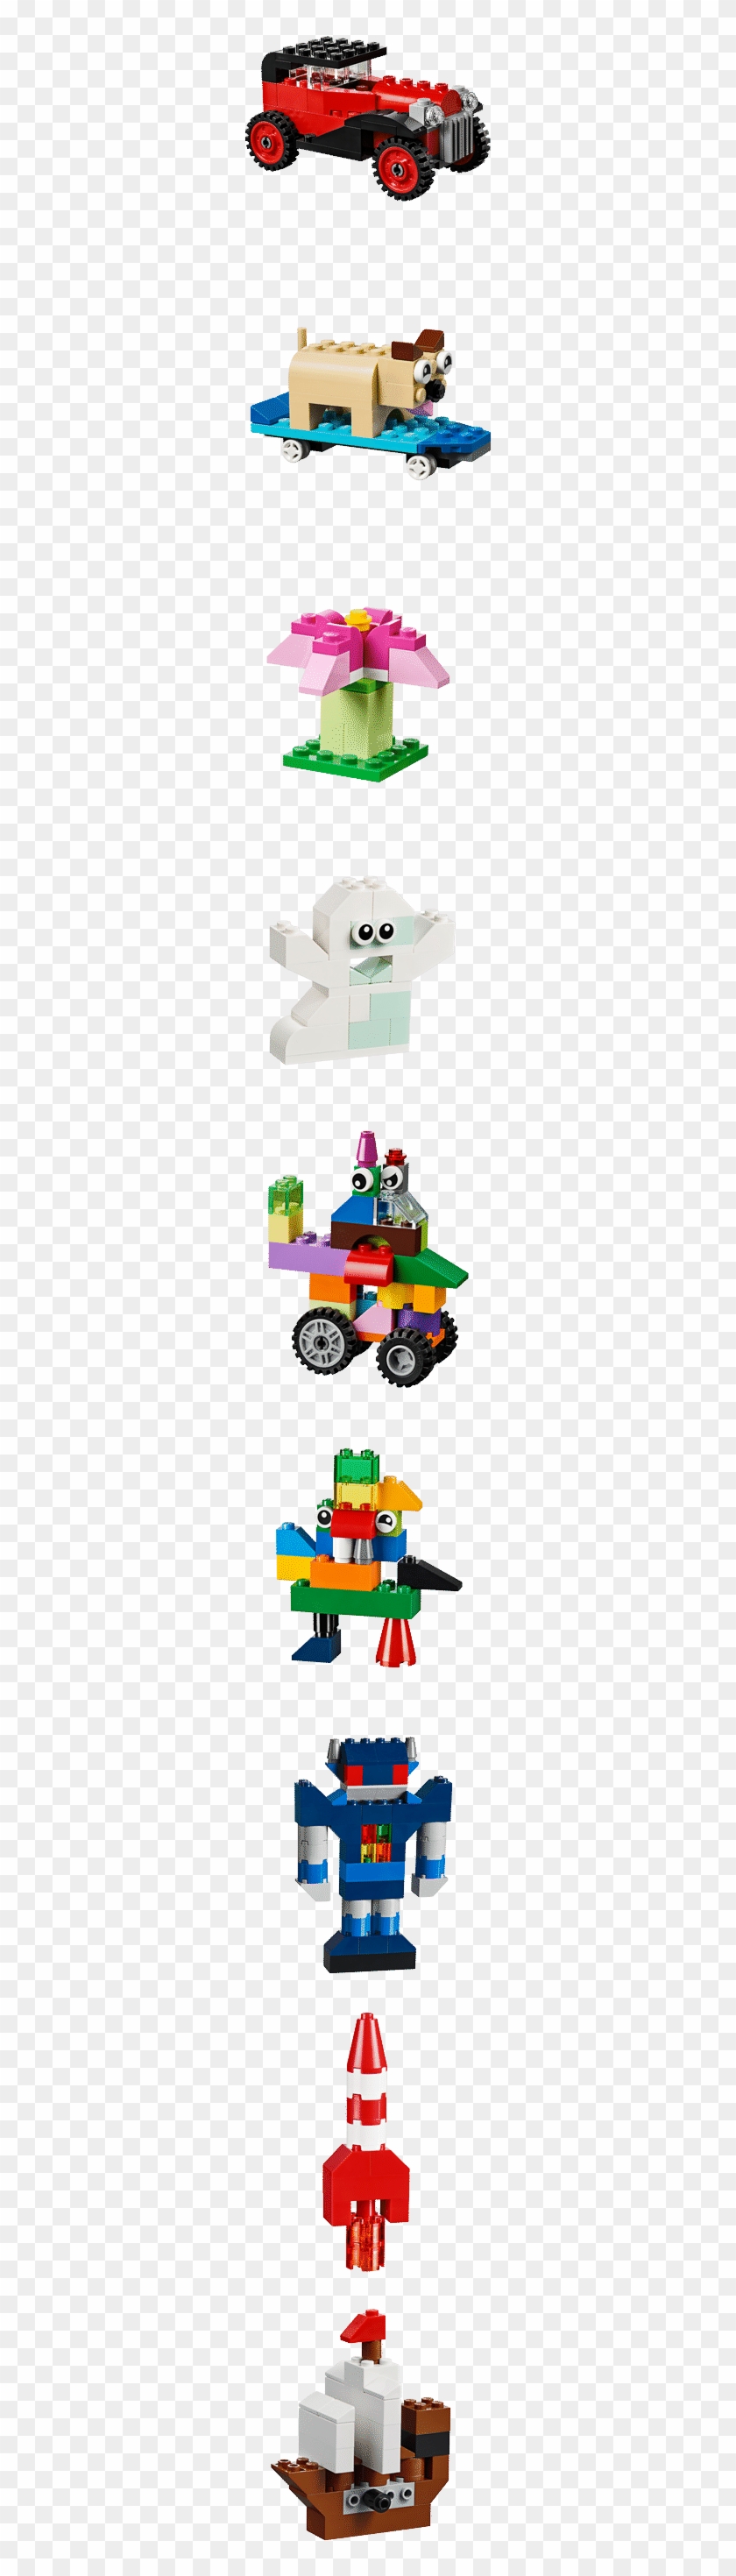 Lego Bricks Inspiration = Endless Possibilities - Lego Classic 10693 Creative Supplement Building Kit #1014609